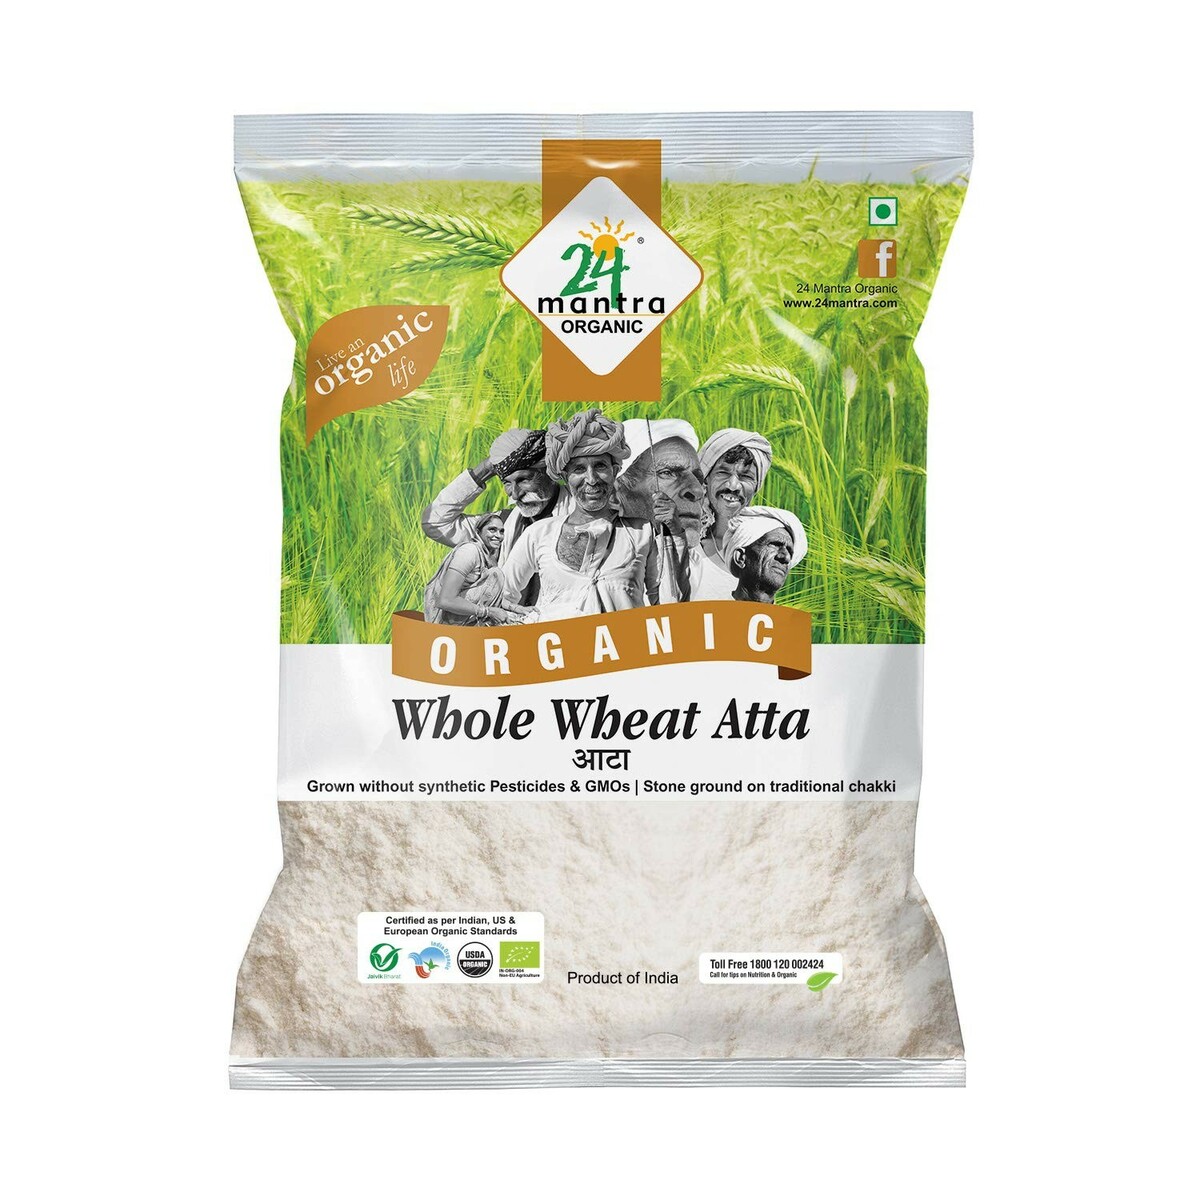 24 Mantra Organic Whole Wheat Atta 5kg